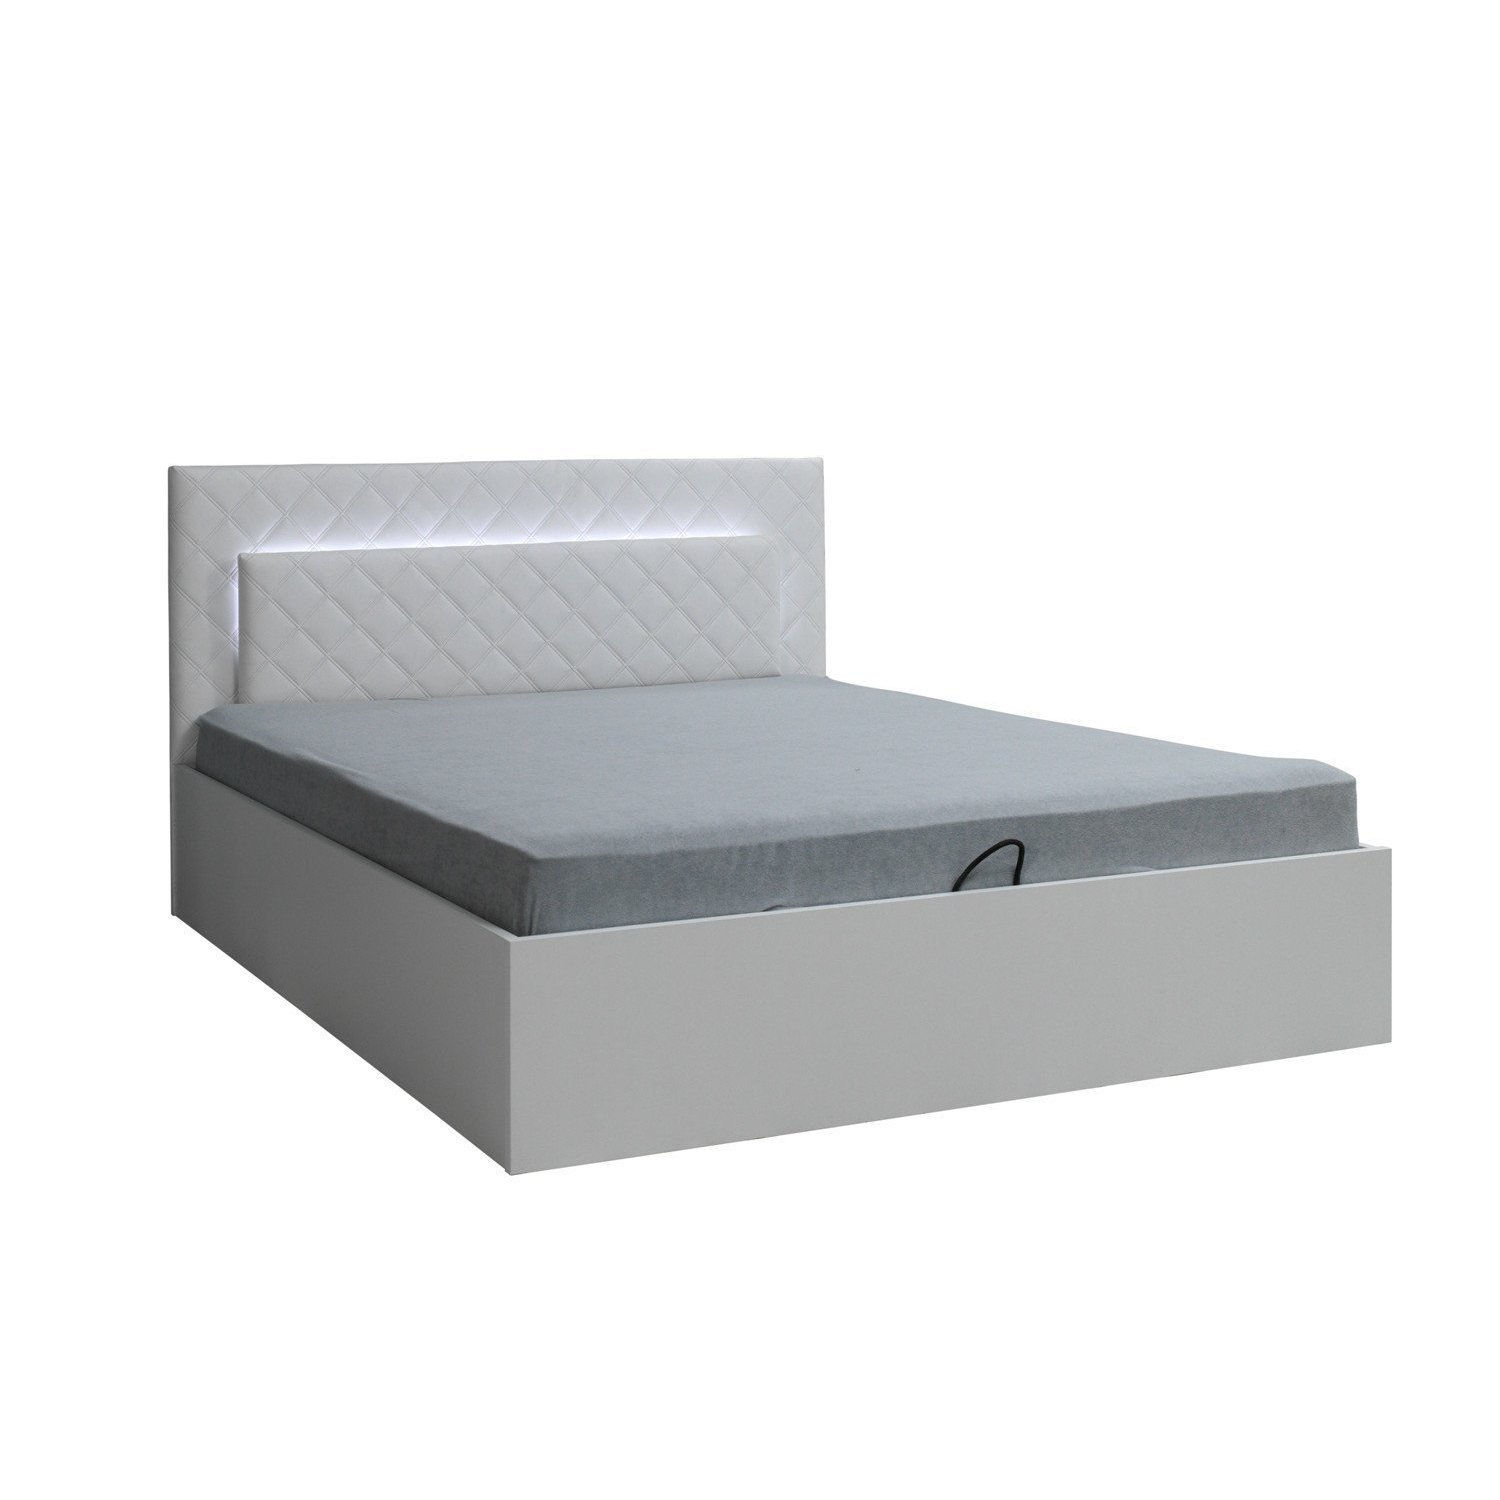 Panarea 81 Bed with Storage 160cm - White Gloss 160 x 200cm